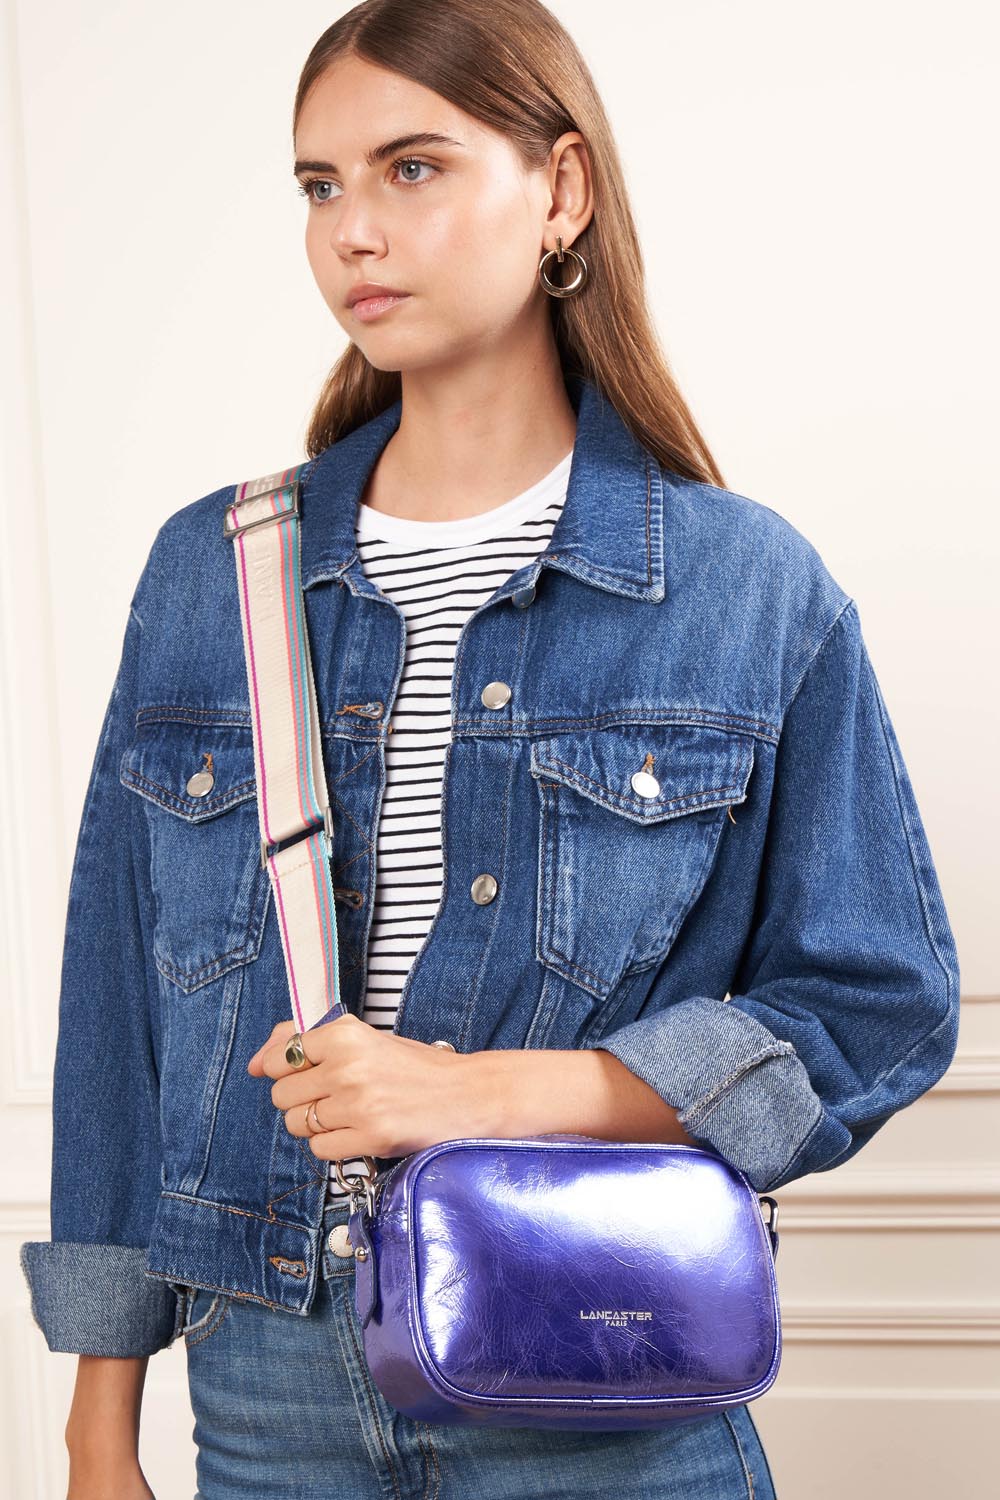 sac trotteur - fashion fIrenze #couleur_bleu-iris